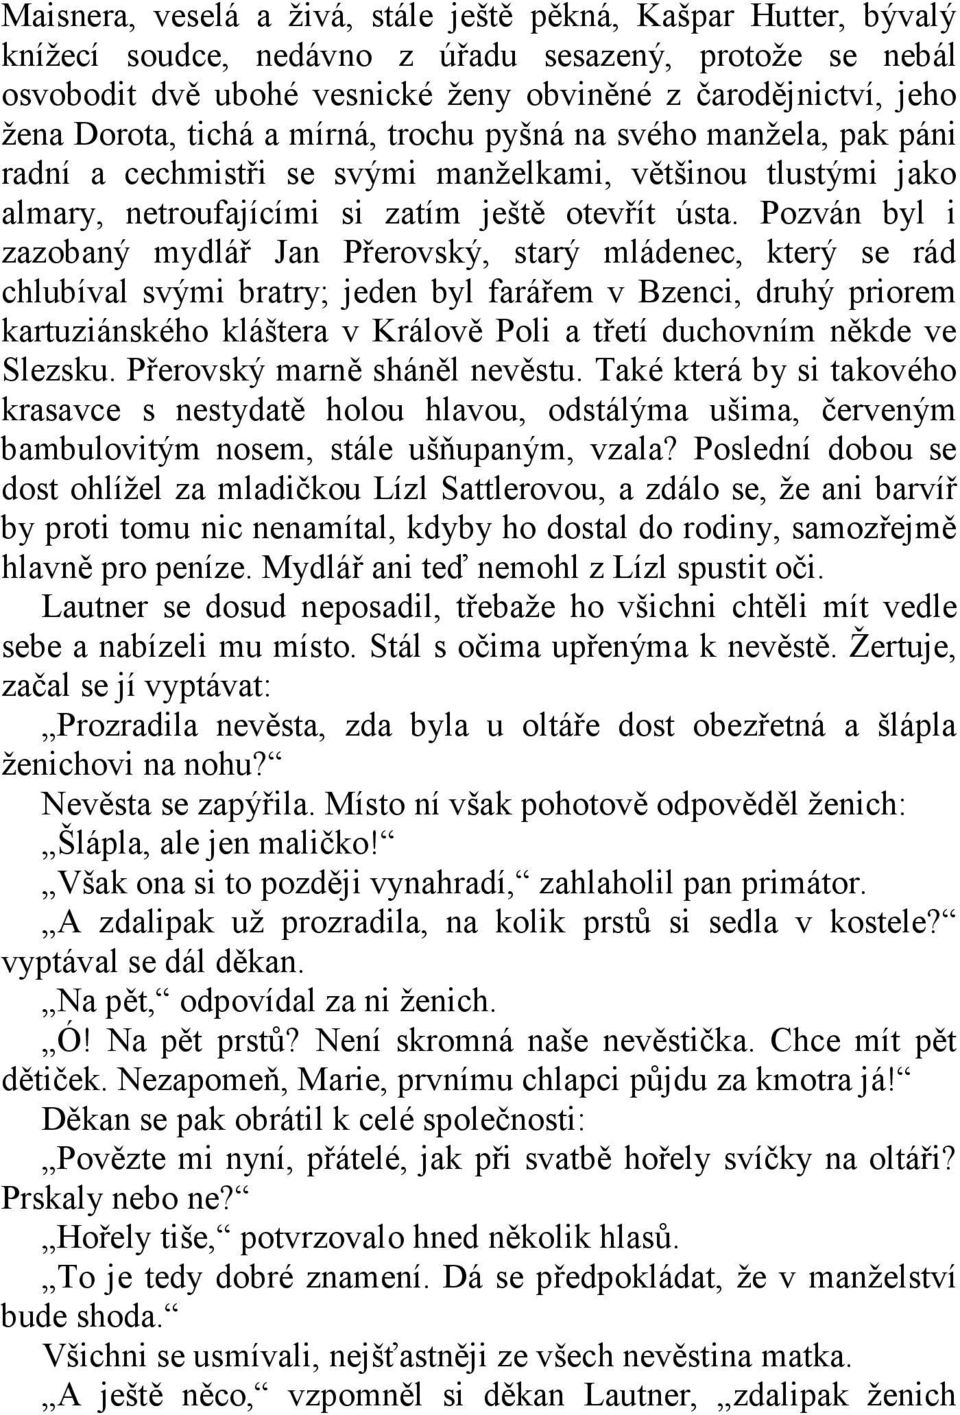 Václav Kaplický. Kladivo na čarodějnice - PDF Stažení zdarma